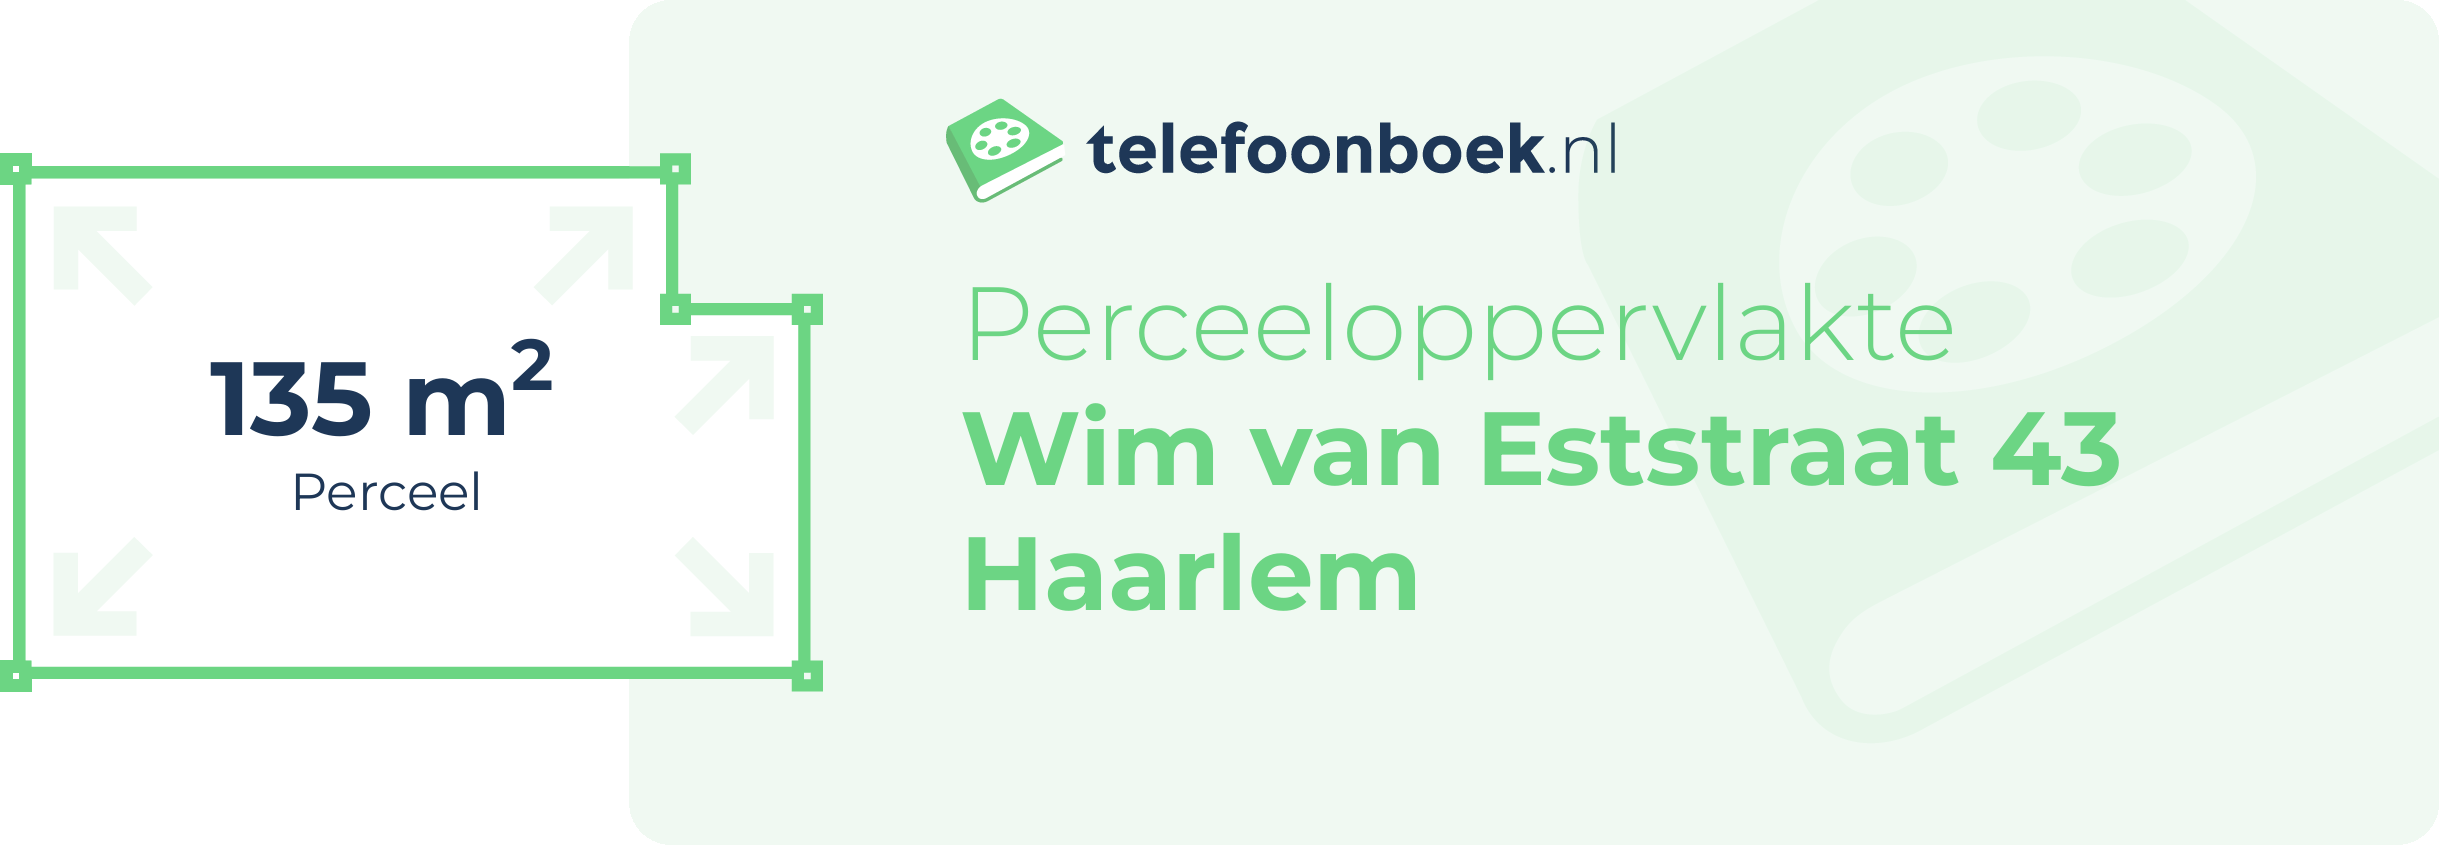 Perceeloppervlakte Wim Van Eststraat 43 Haarlem